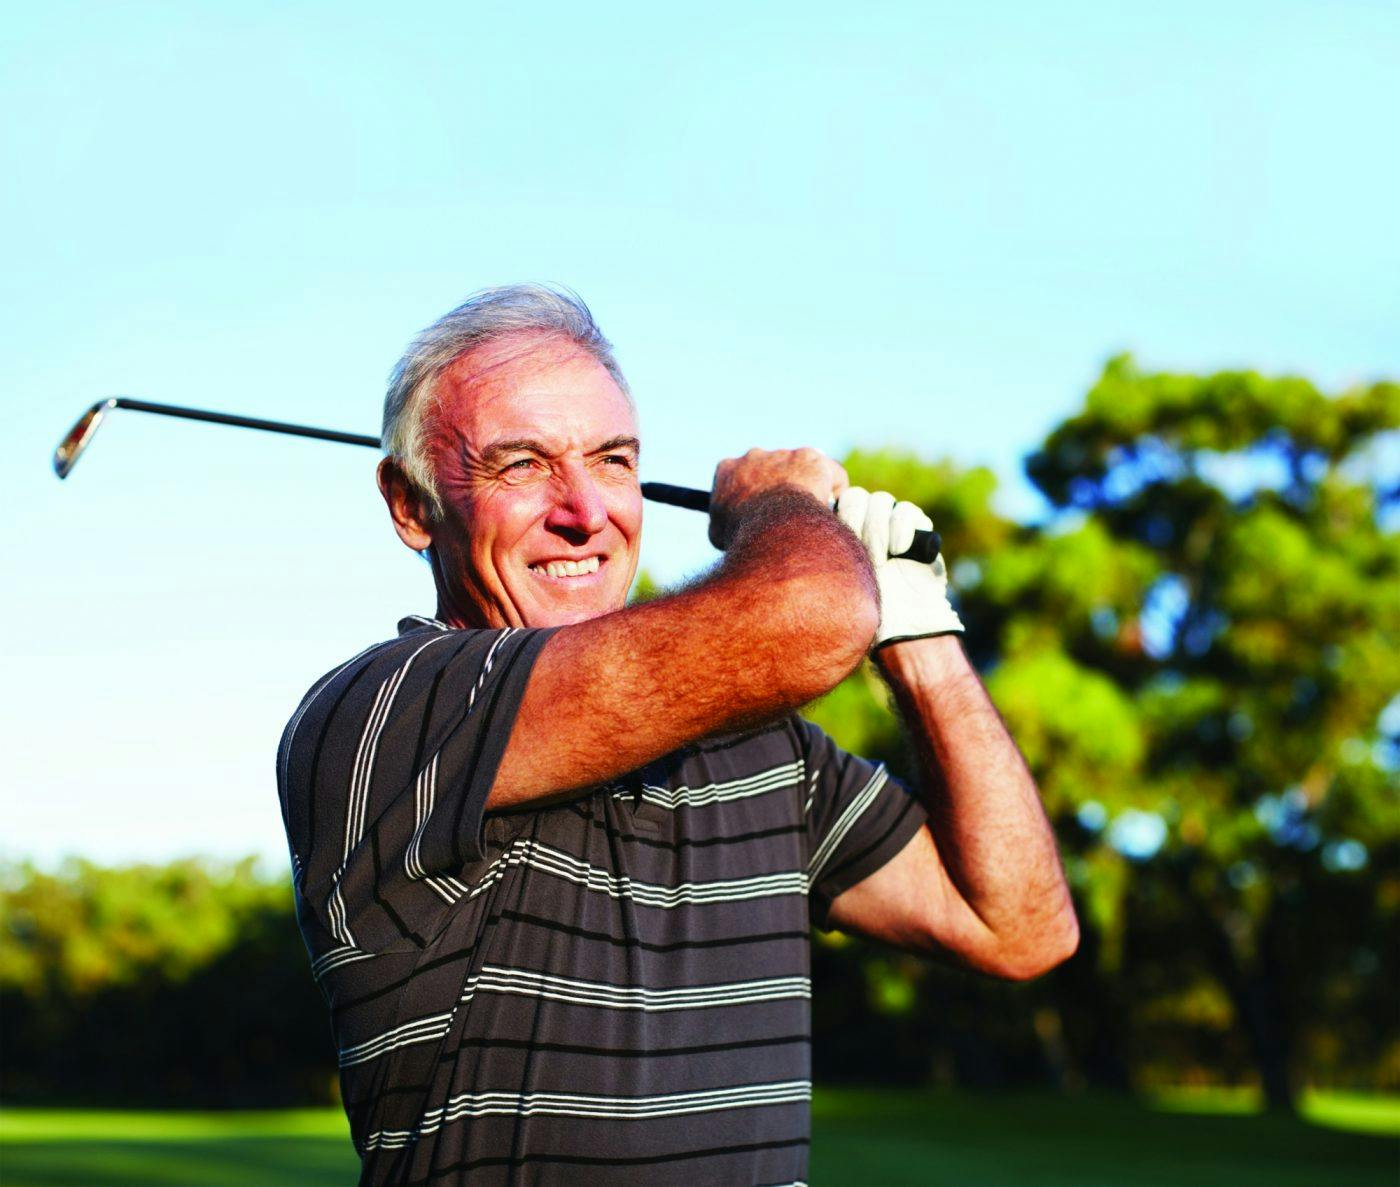 Mature Man Playing Golf I Stock 154957215